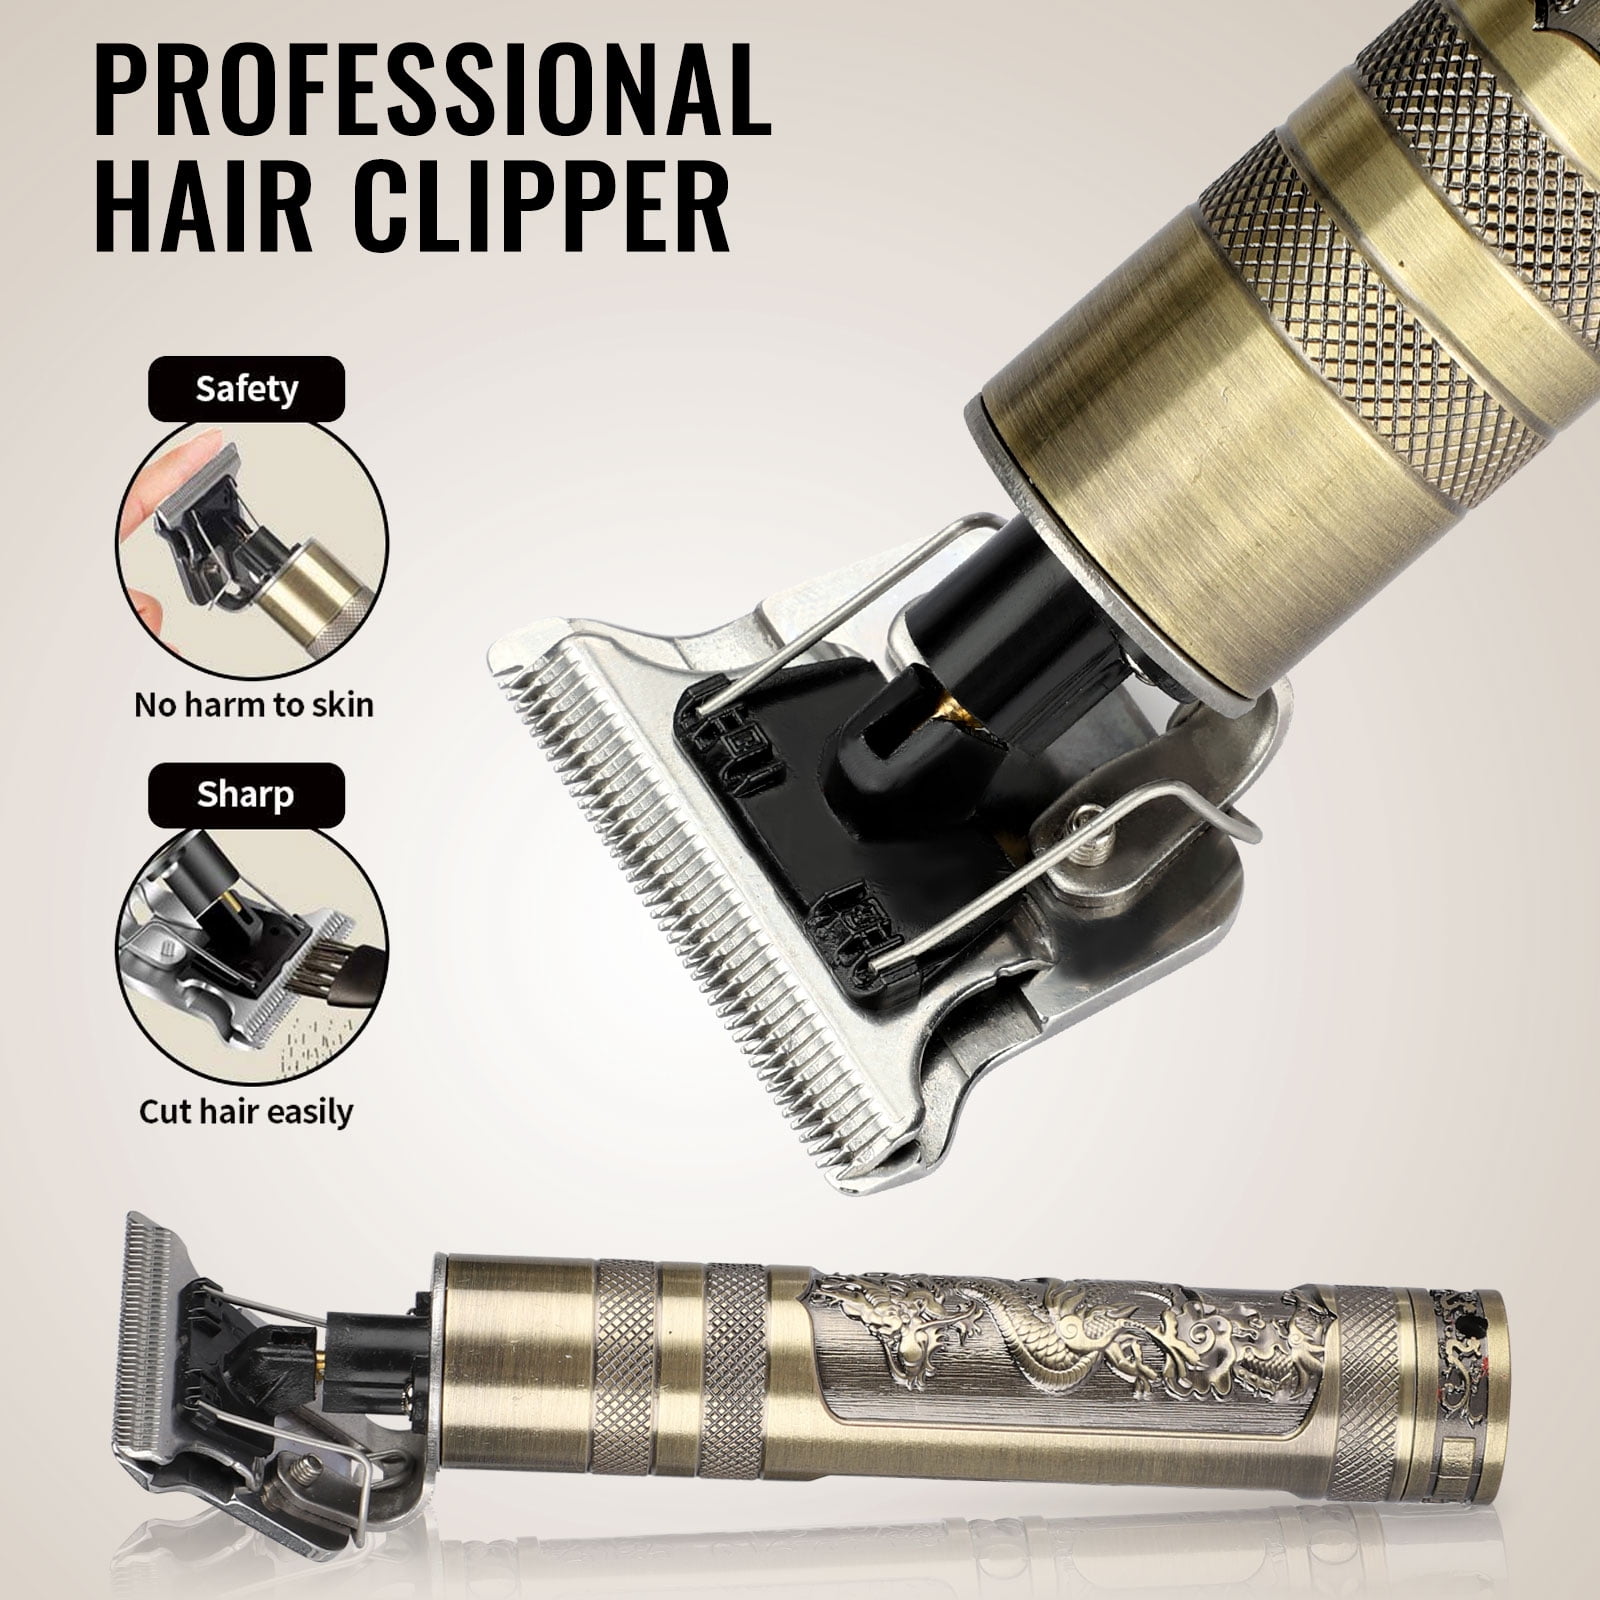 cordless zero gapped trimmer hair clipper reviews